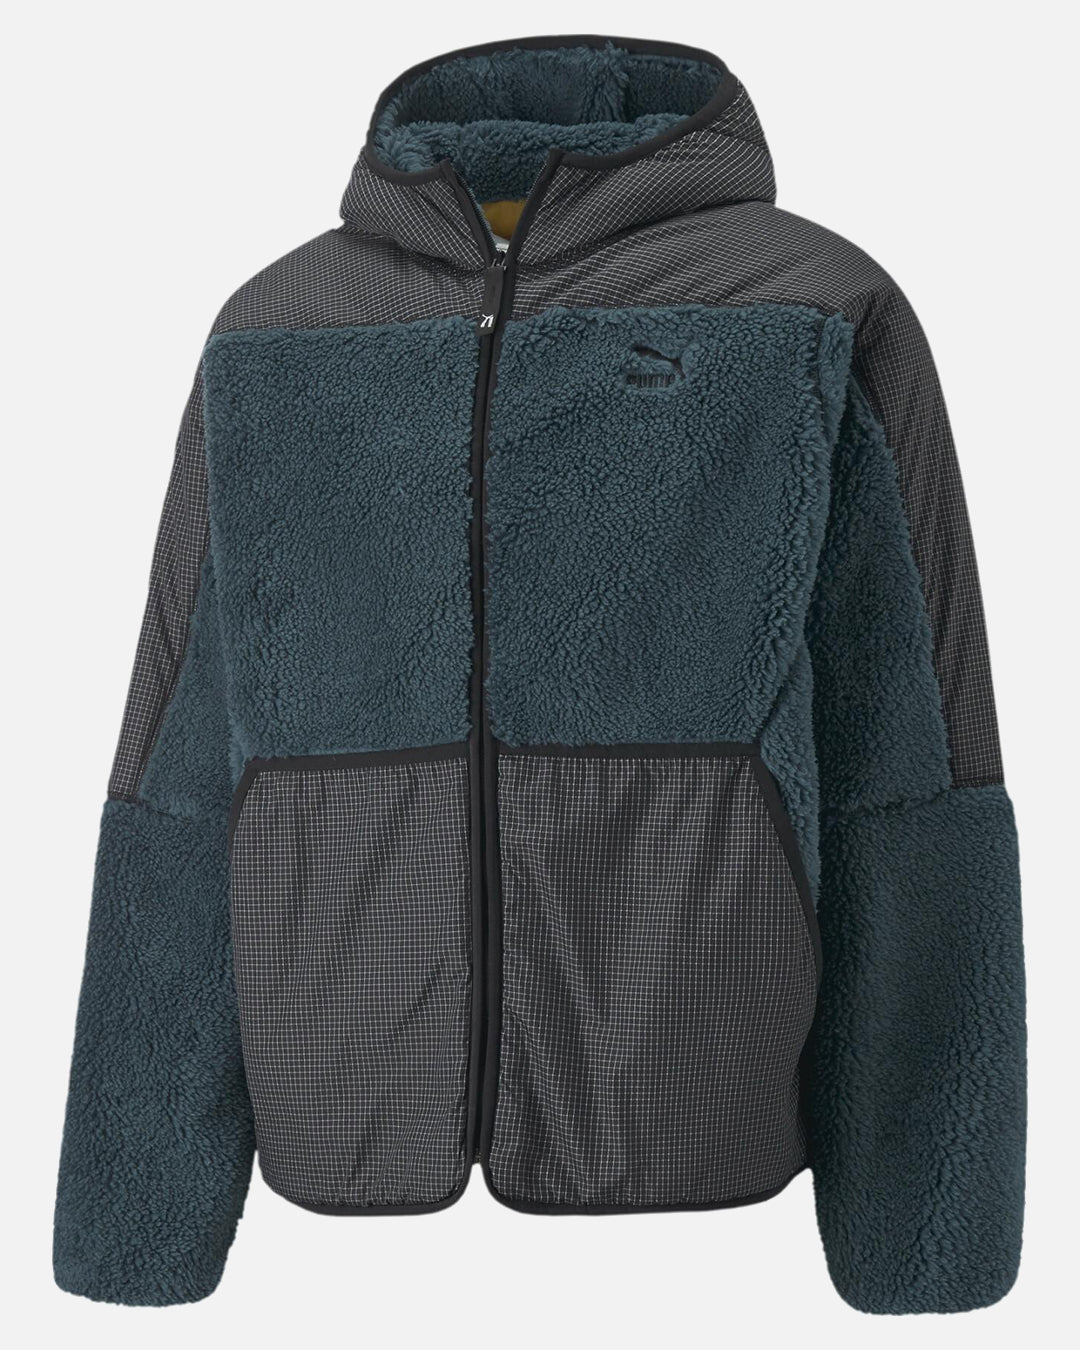 Puma Sherpa Hooded Jacket - Black/Green